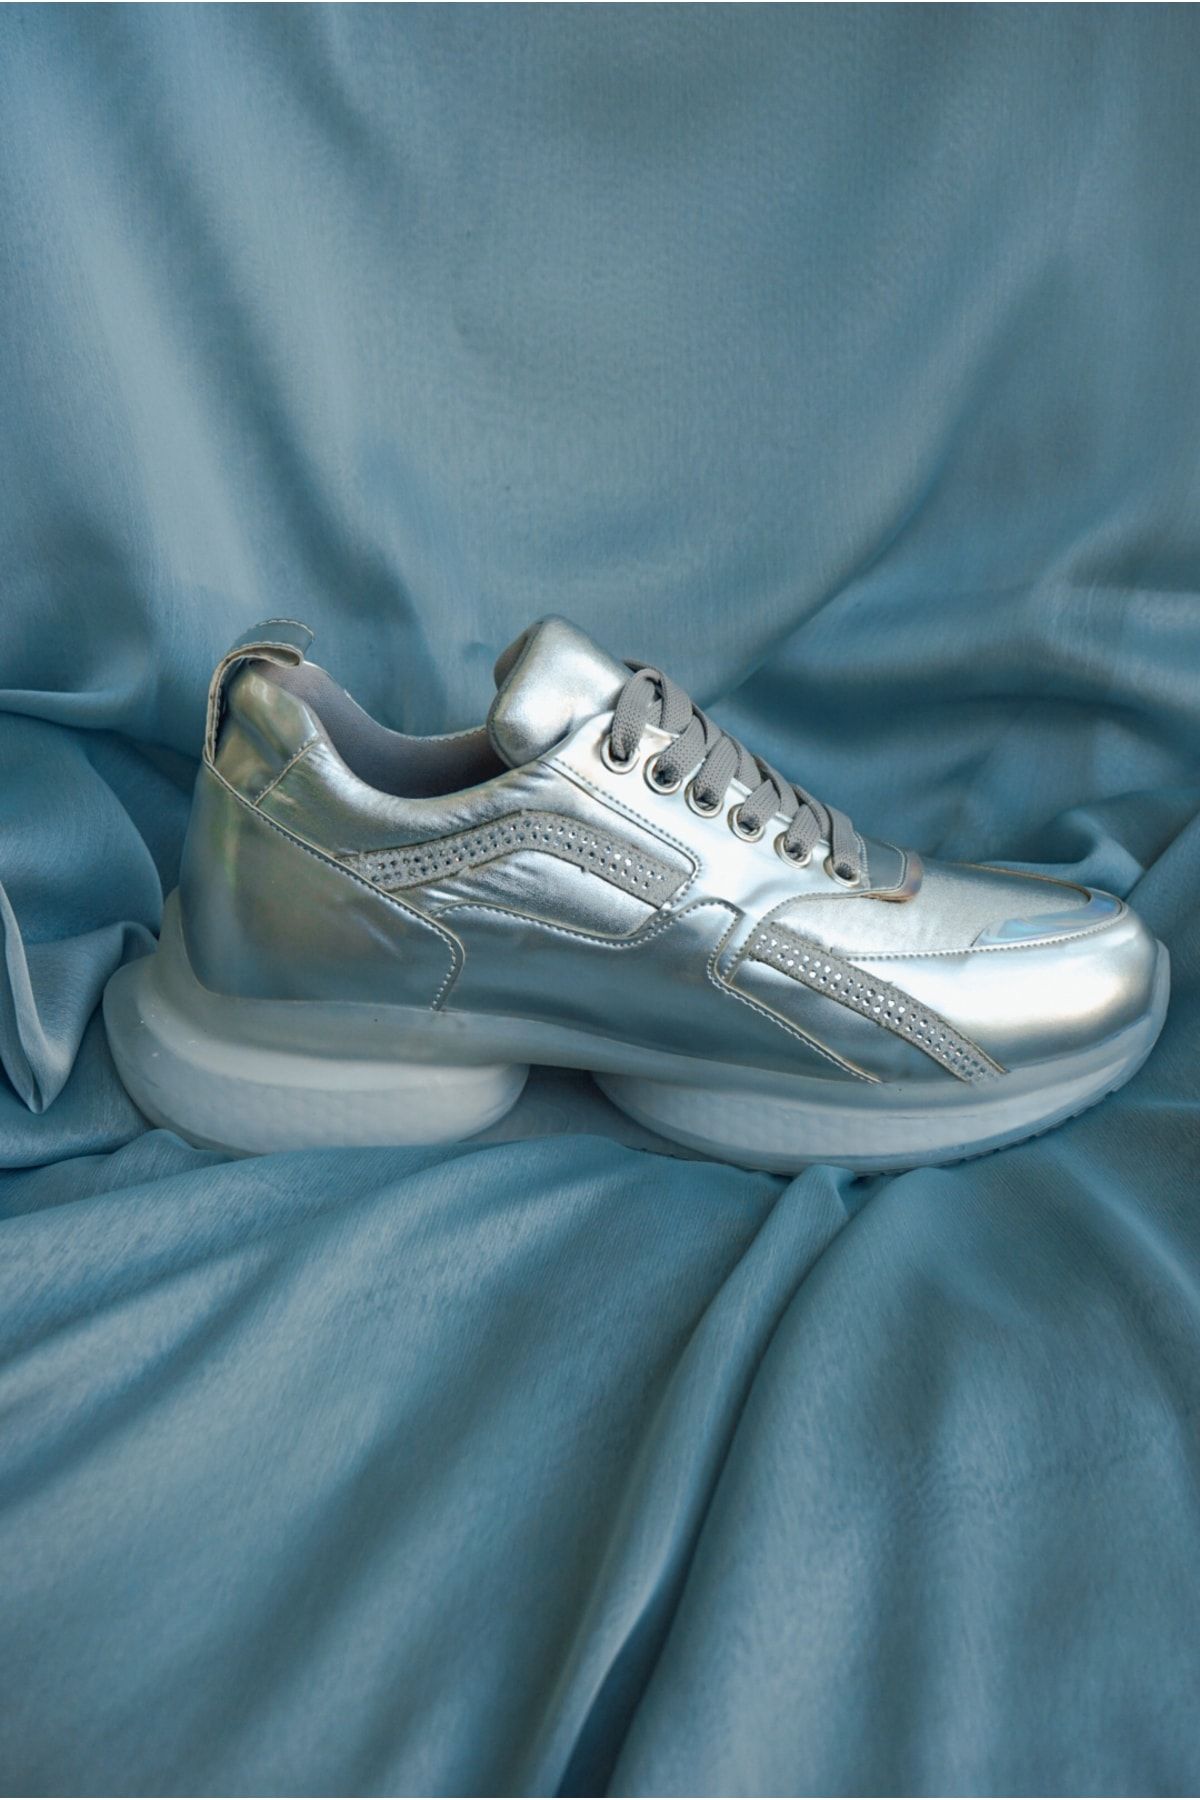 Dgn 1064-23y Kadin Kalin Taban Silver Taşli Sneakers Ayakkabı 1064-2025